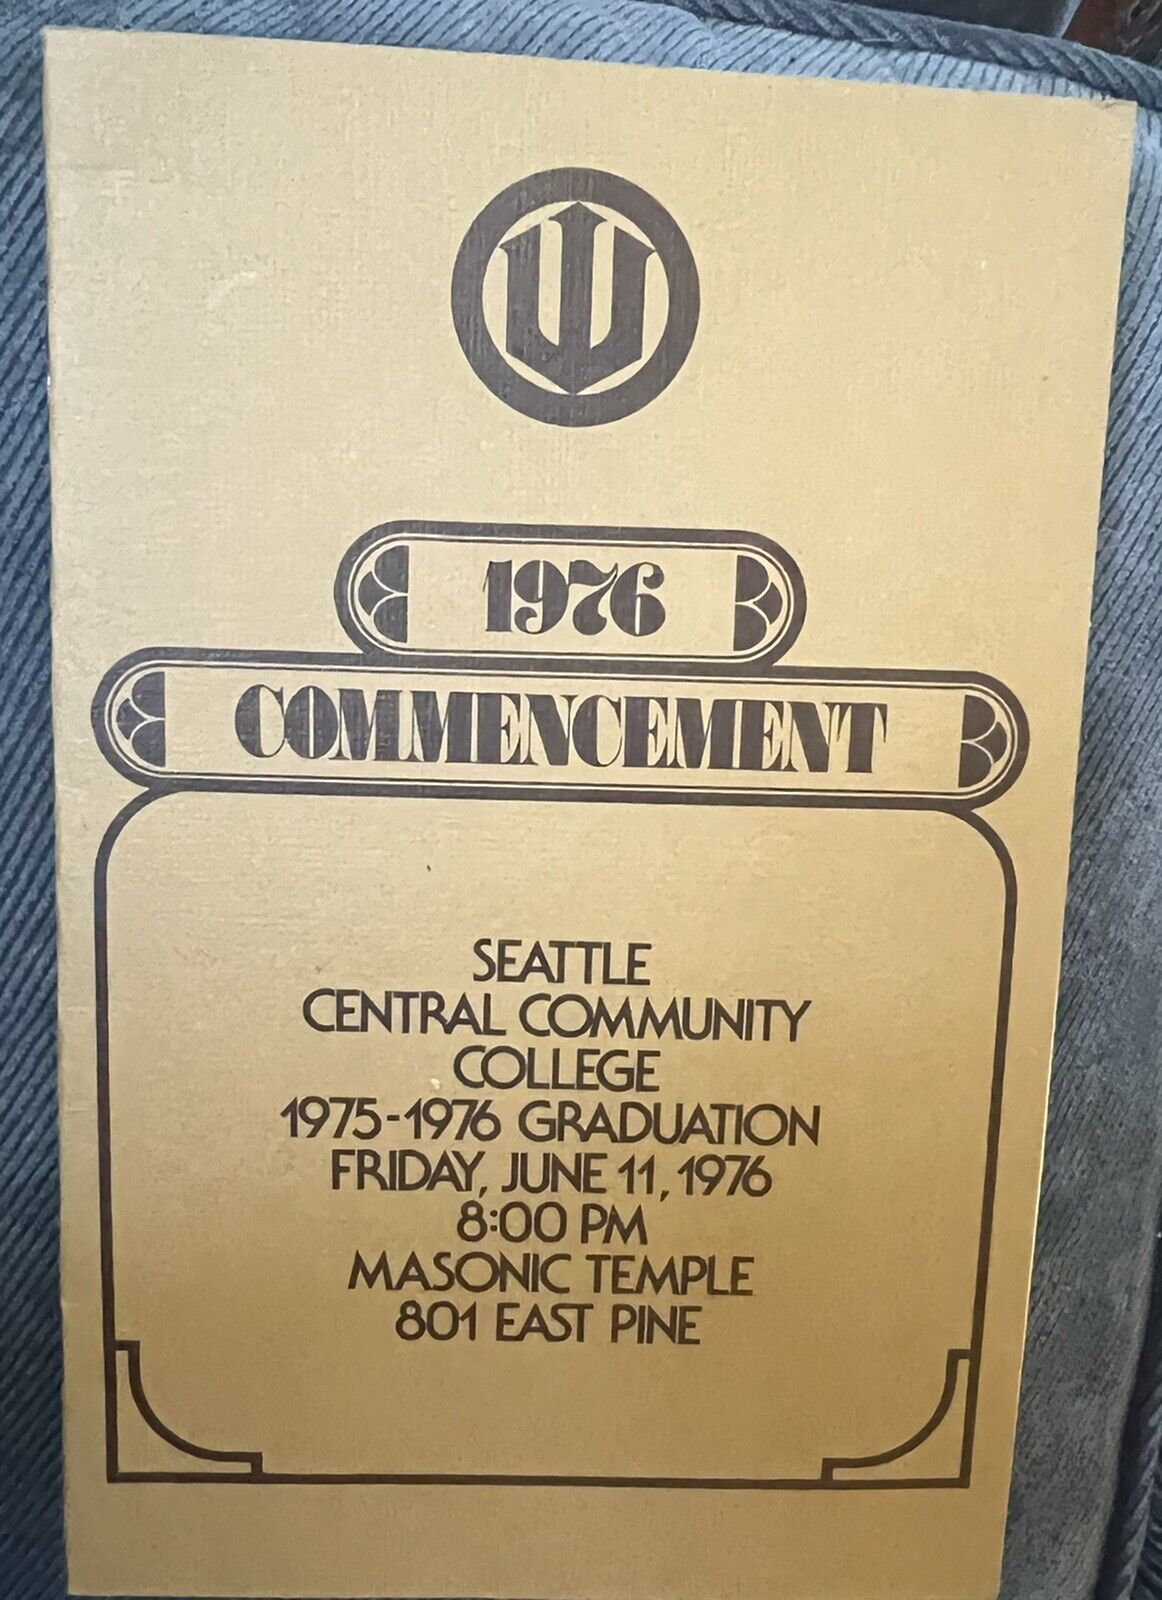 1976 Seattle Central Community College Commencement Program & Graduation Ticket